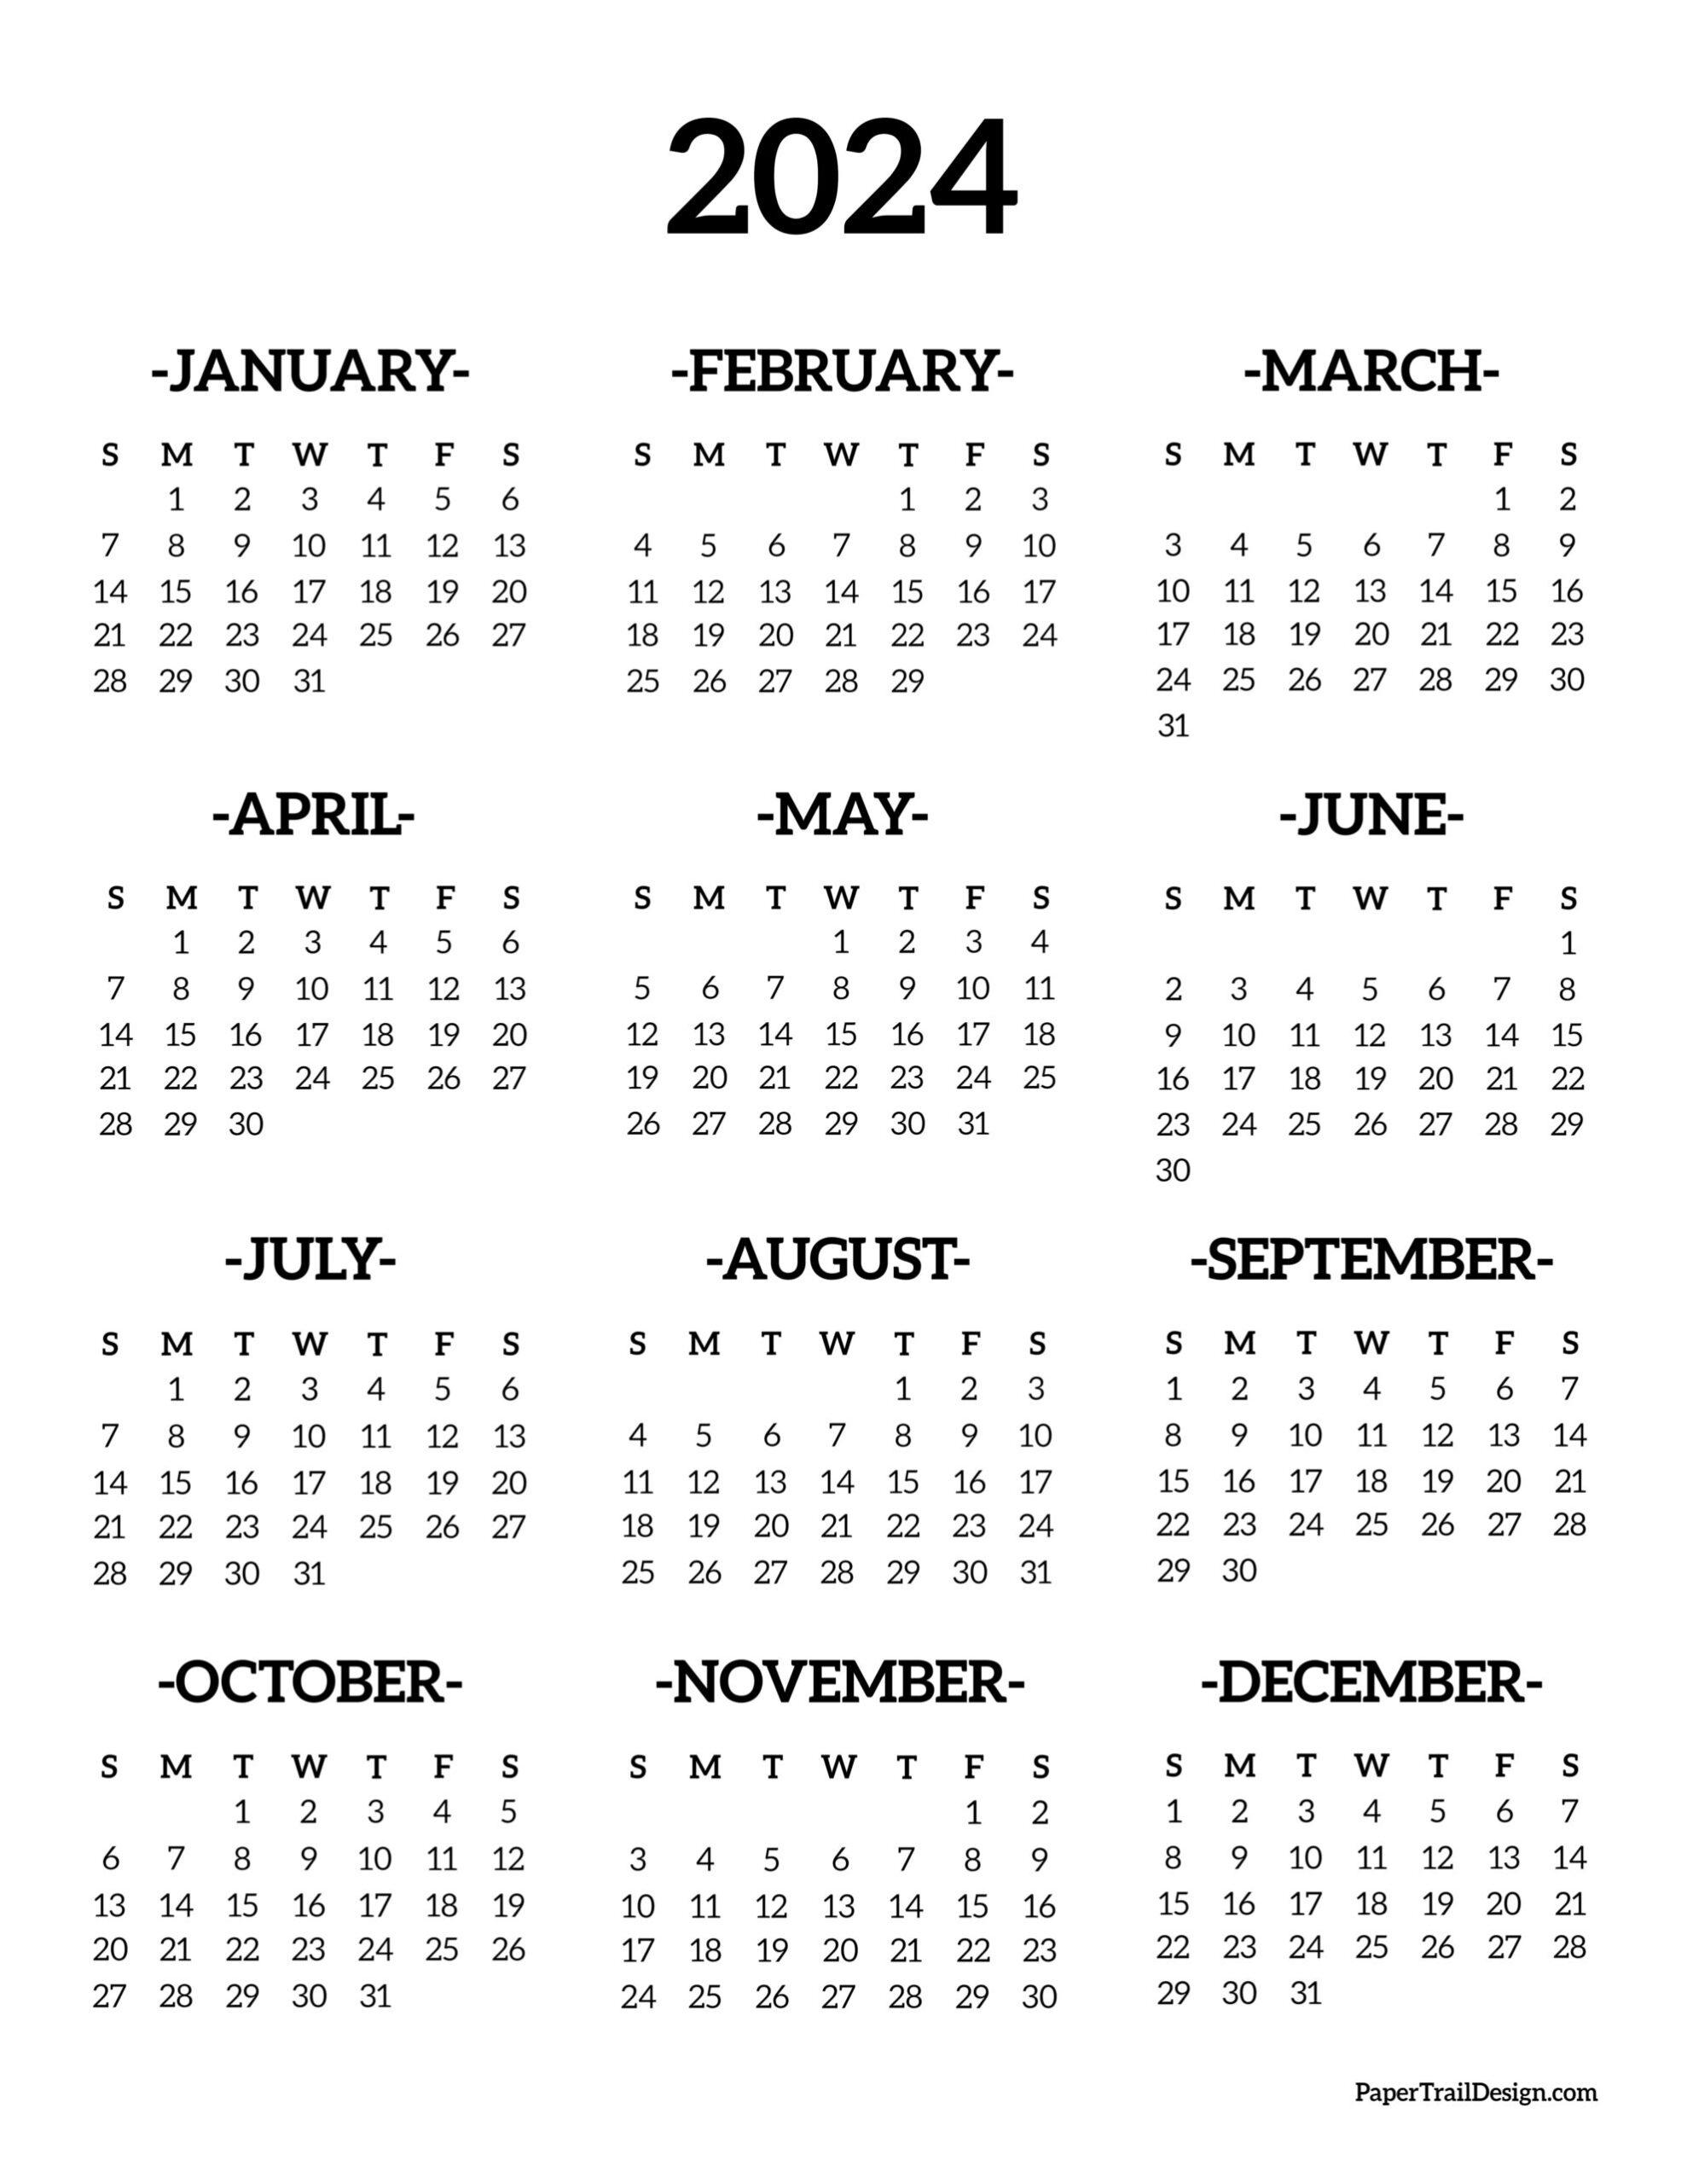 Calendar 2024 Printable One Page - Paper Trail Design | Printable Calendar 2024 Year